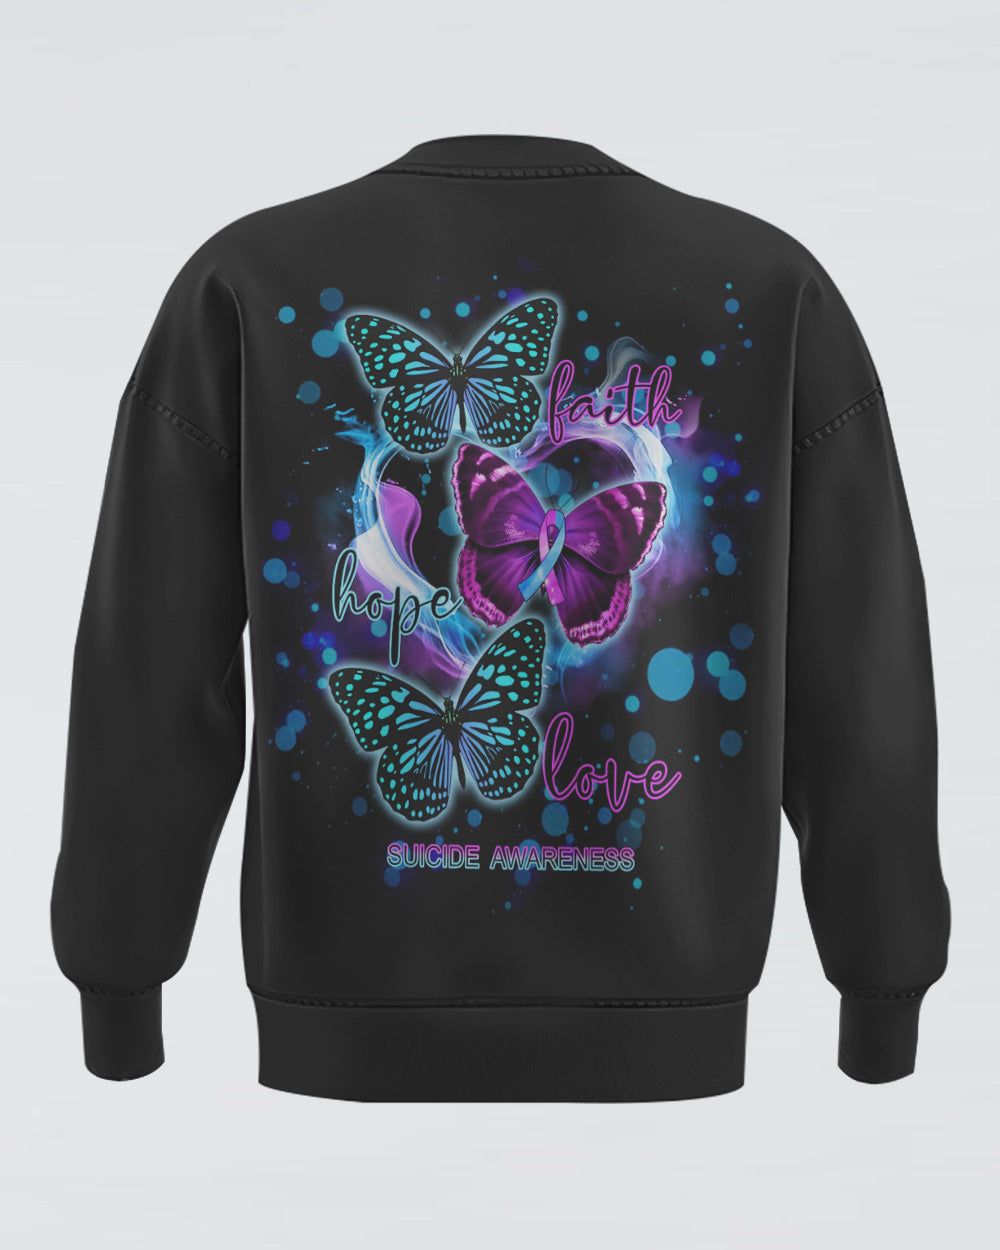 Butterfly Faith Hope Love Heart Women's Suicide Prevention Awareness Sweatshirt